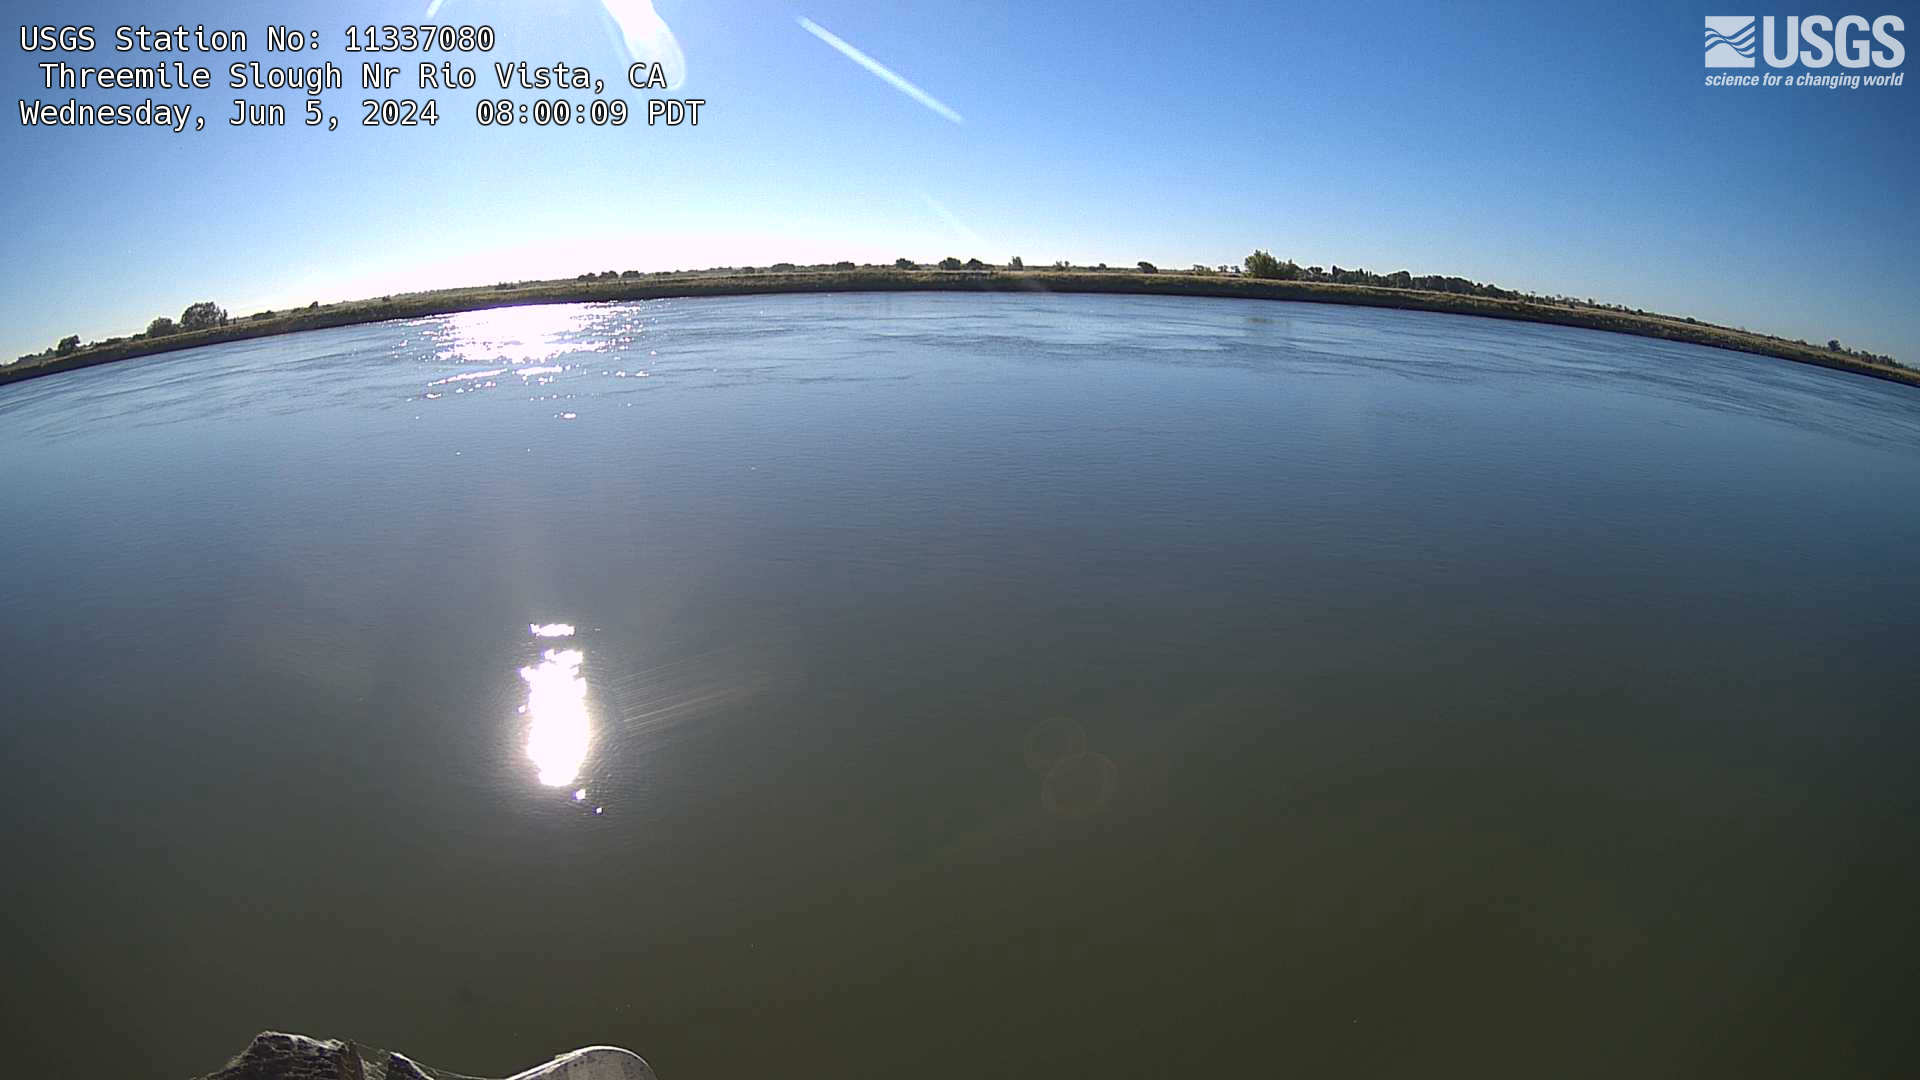 This is the latest image of Threemile Slough Nr Rio Vista Webcam located in California.